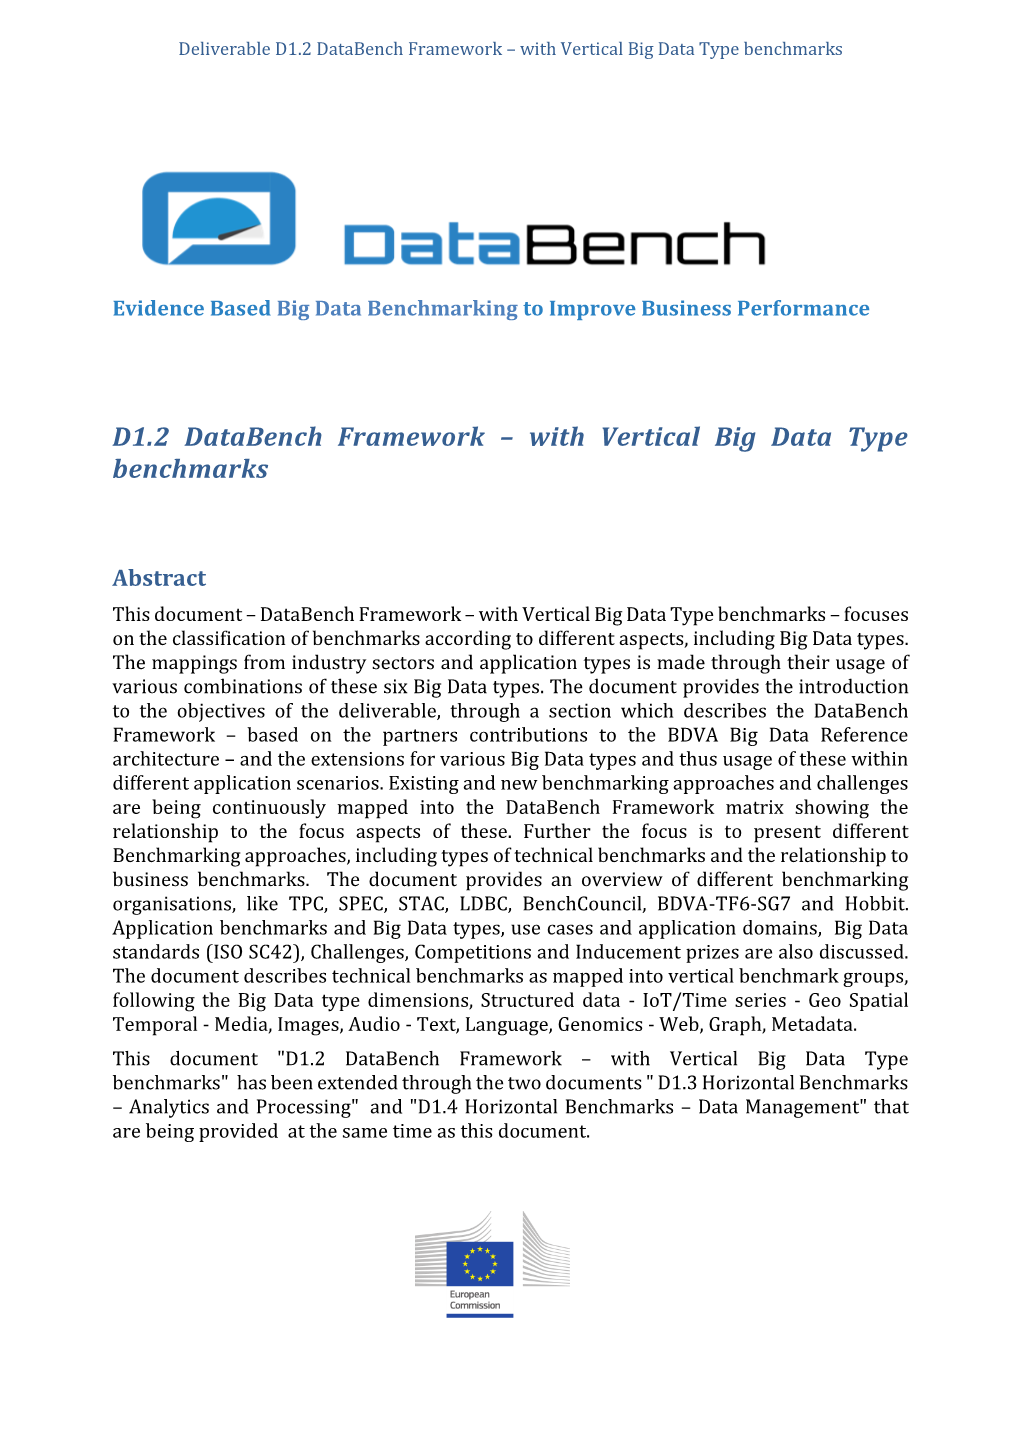 Databench D1.2 Databench Framework with Vertical Big Data